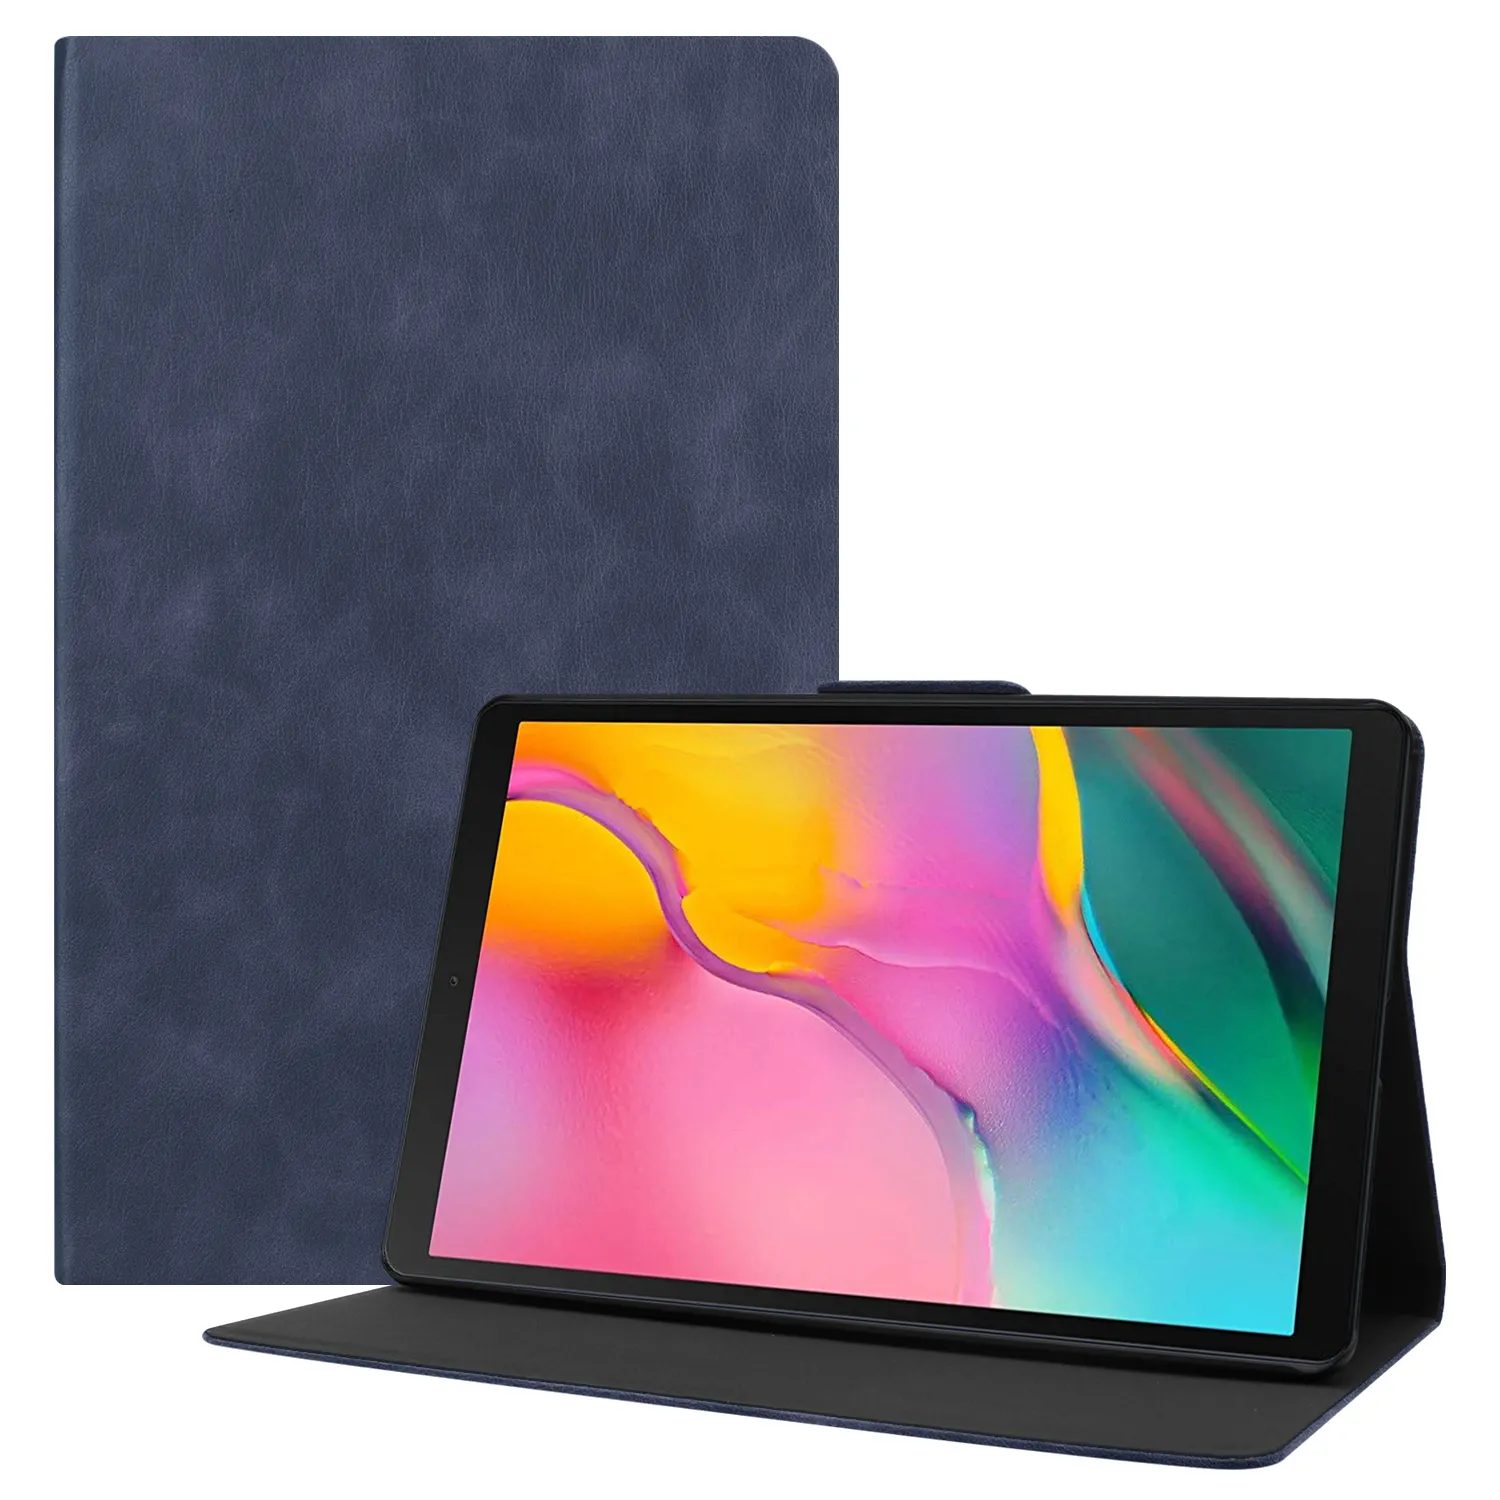 Flip Ledertasche für Galaxy Tab A 10.1 Hülle 2019 T510 T515 T517 Stand hülle Abdeckung für Samsung Tab A 10.1 Zoll Tablet Hülle